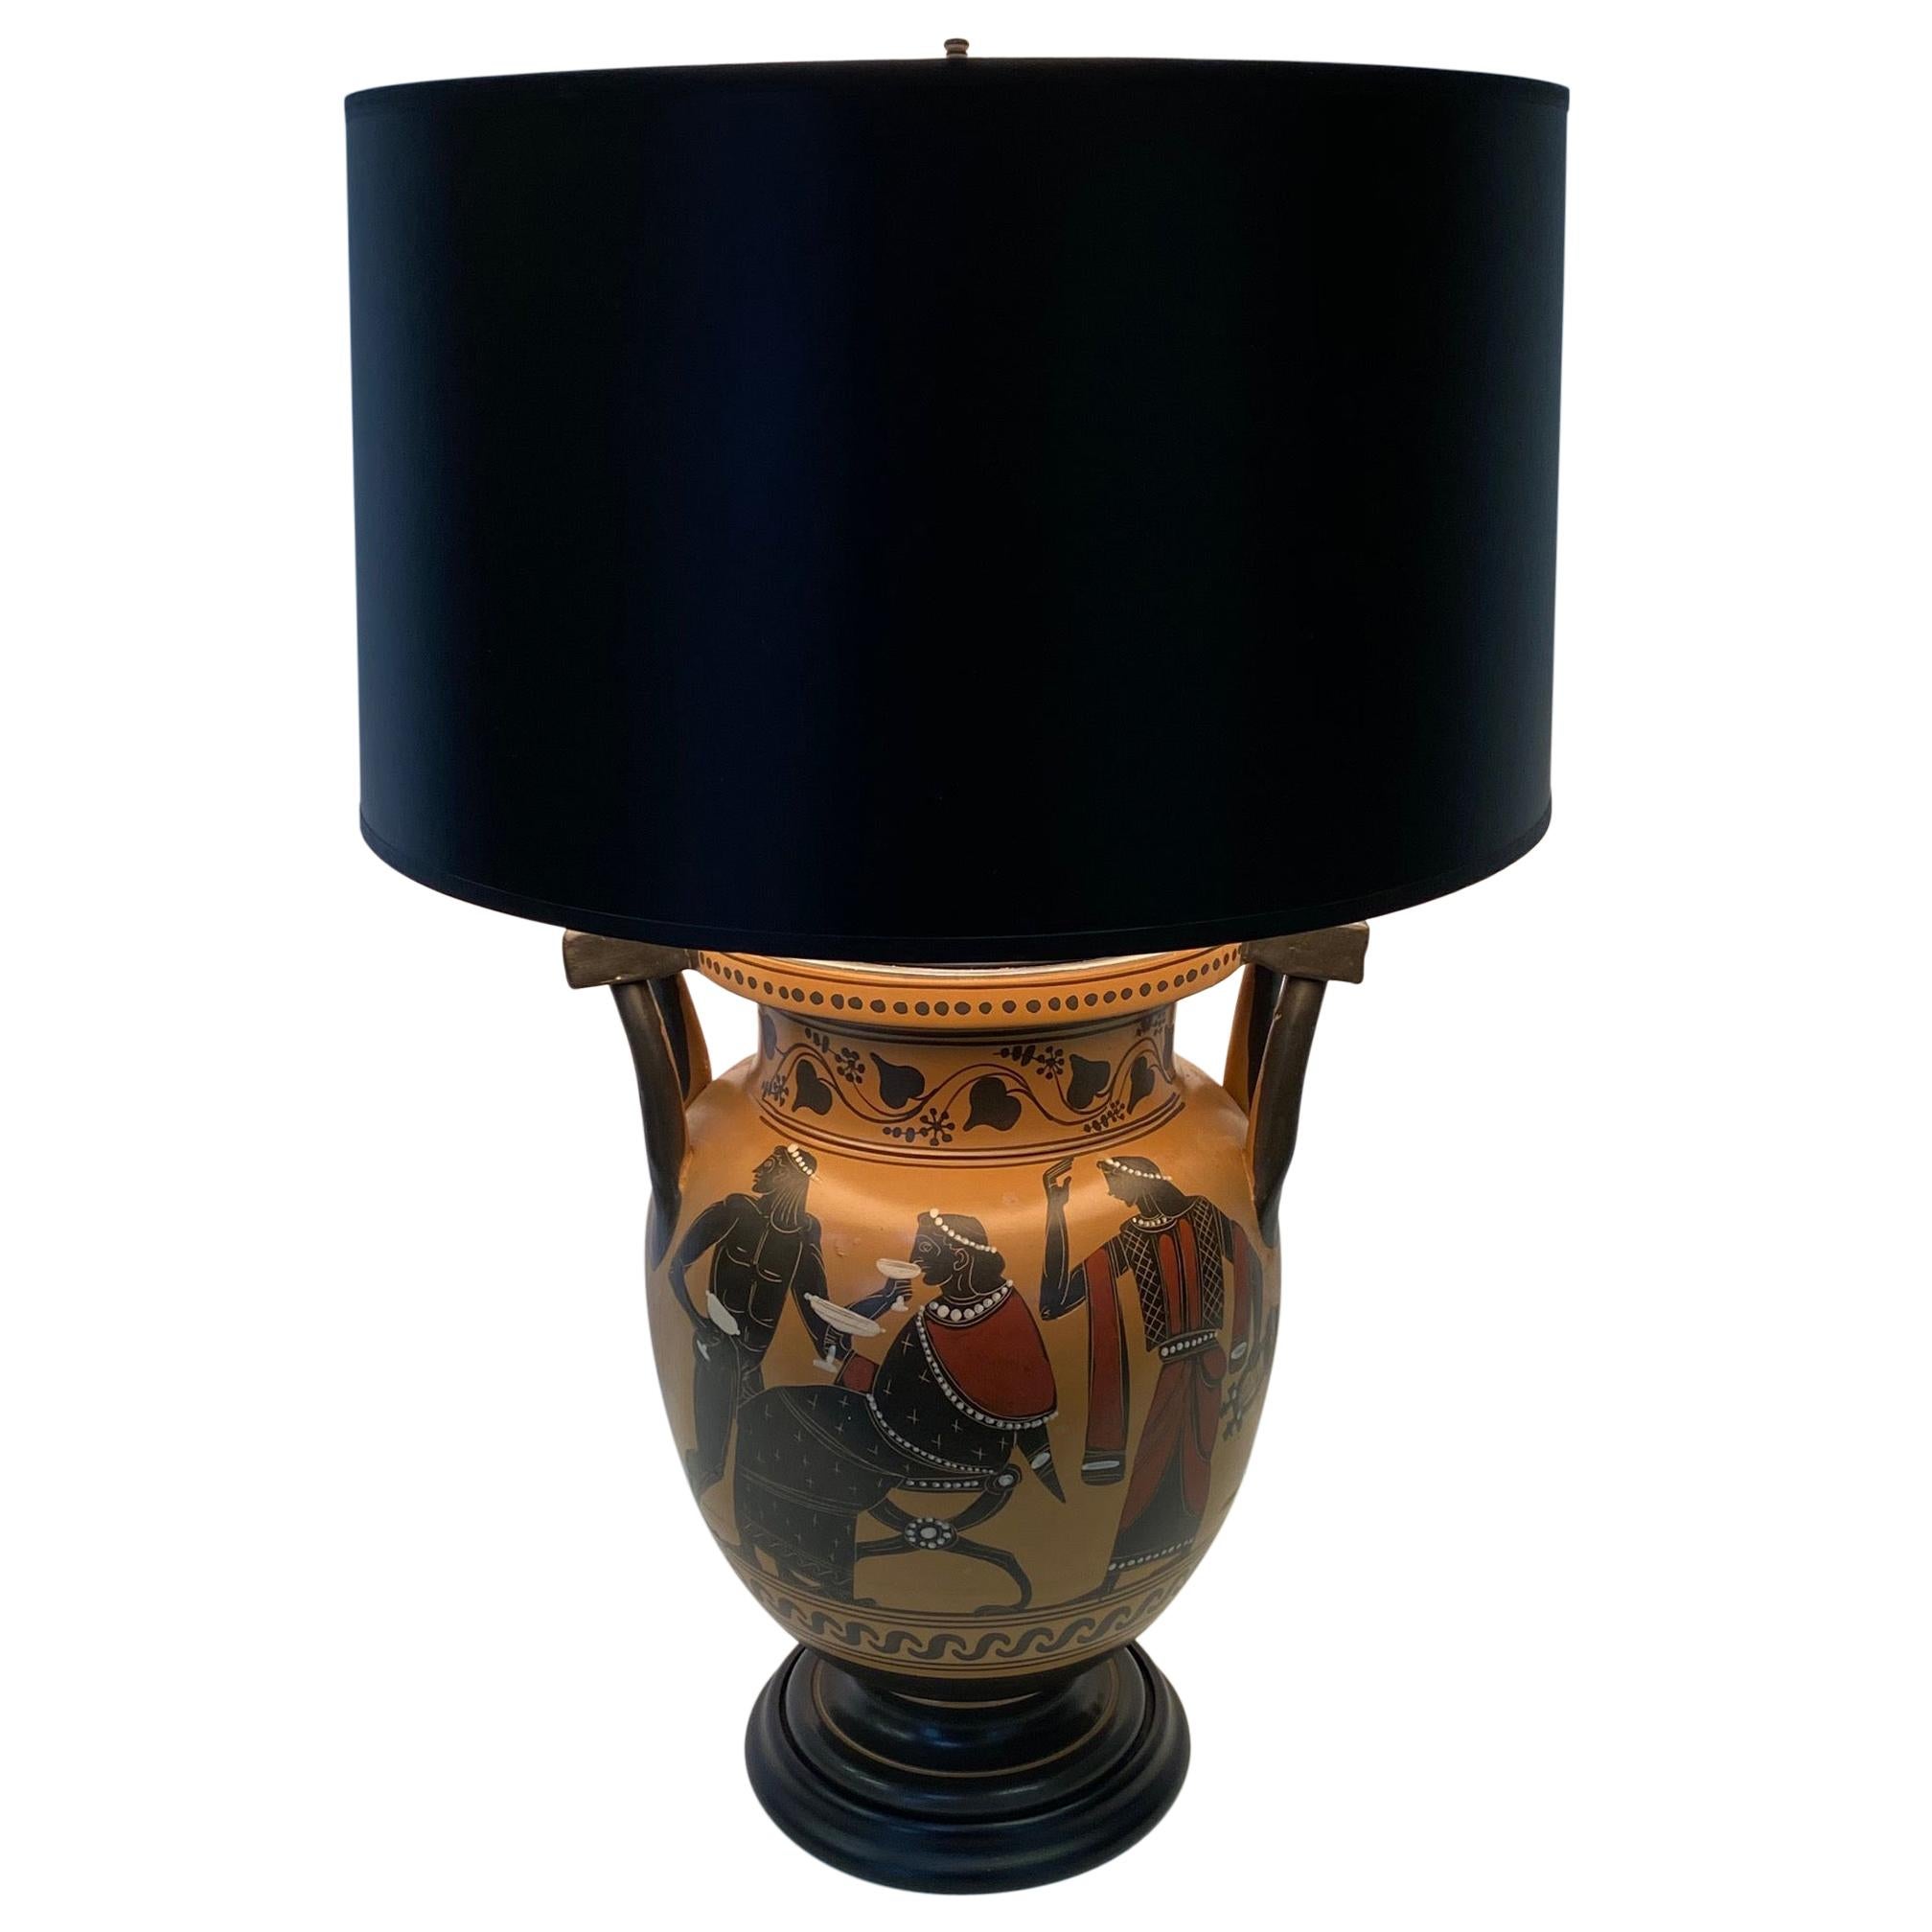 Richly Elegant Classical Style Greek Vase Lamp